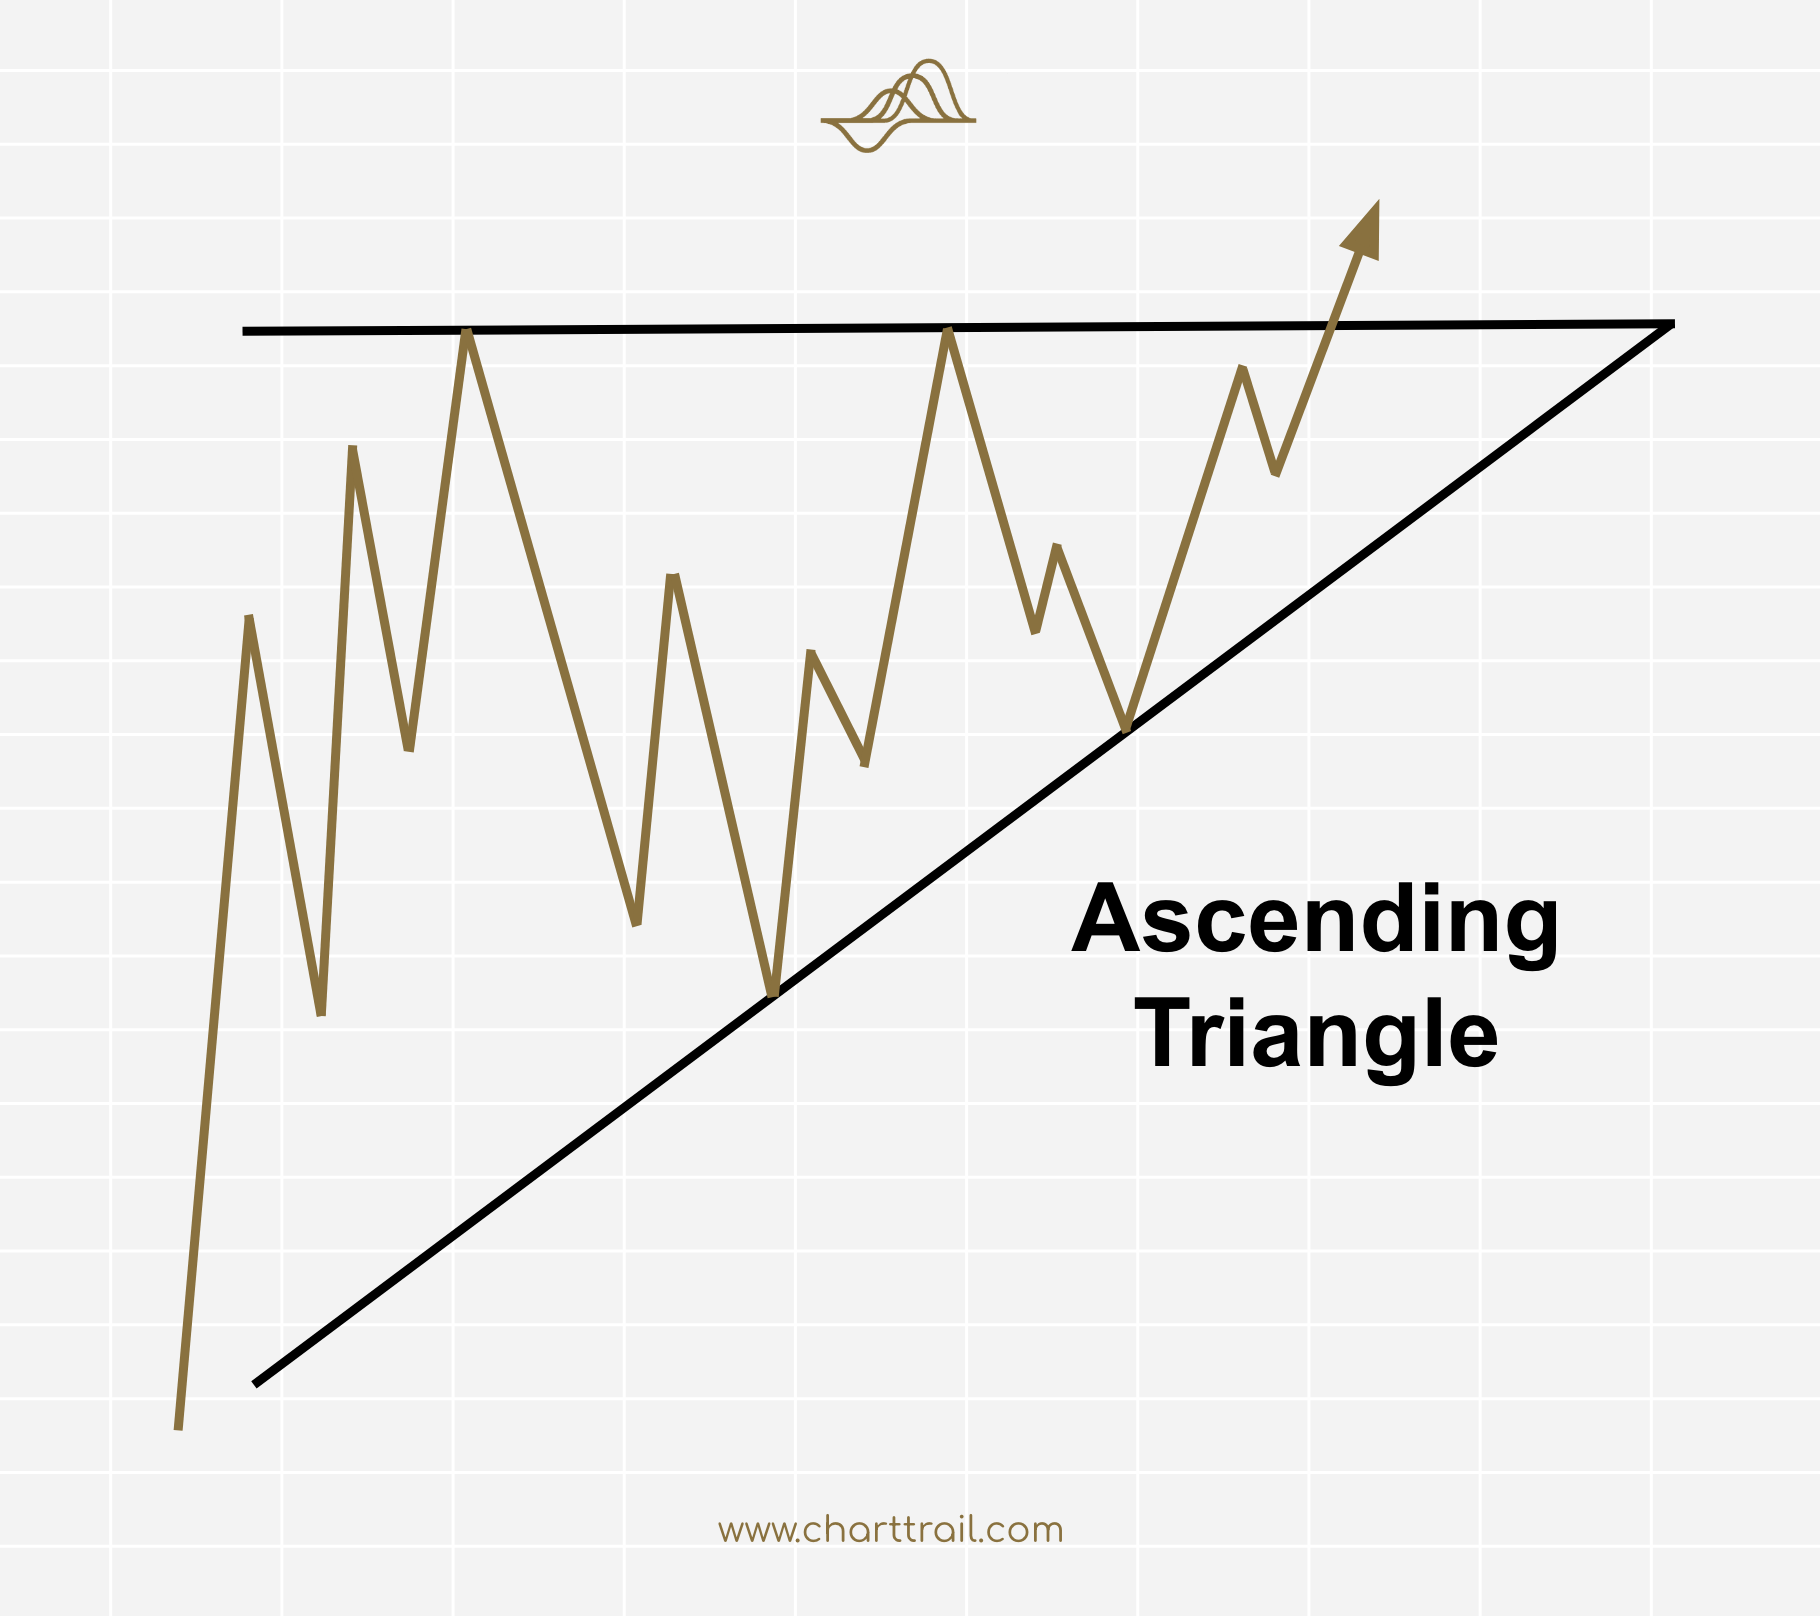 Ascending Triangle คือ